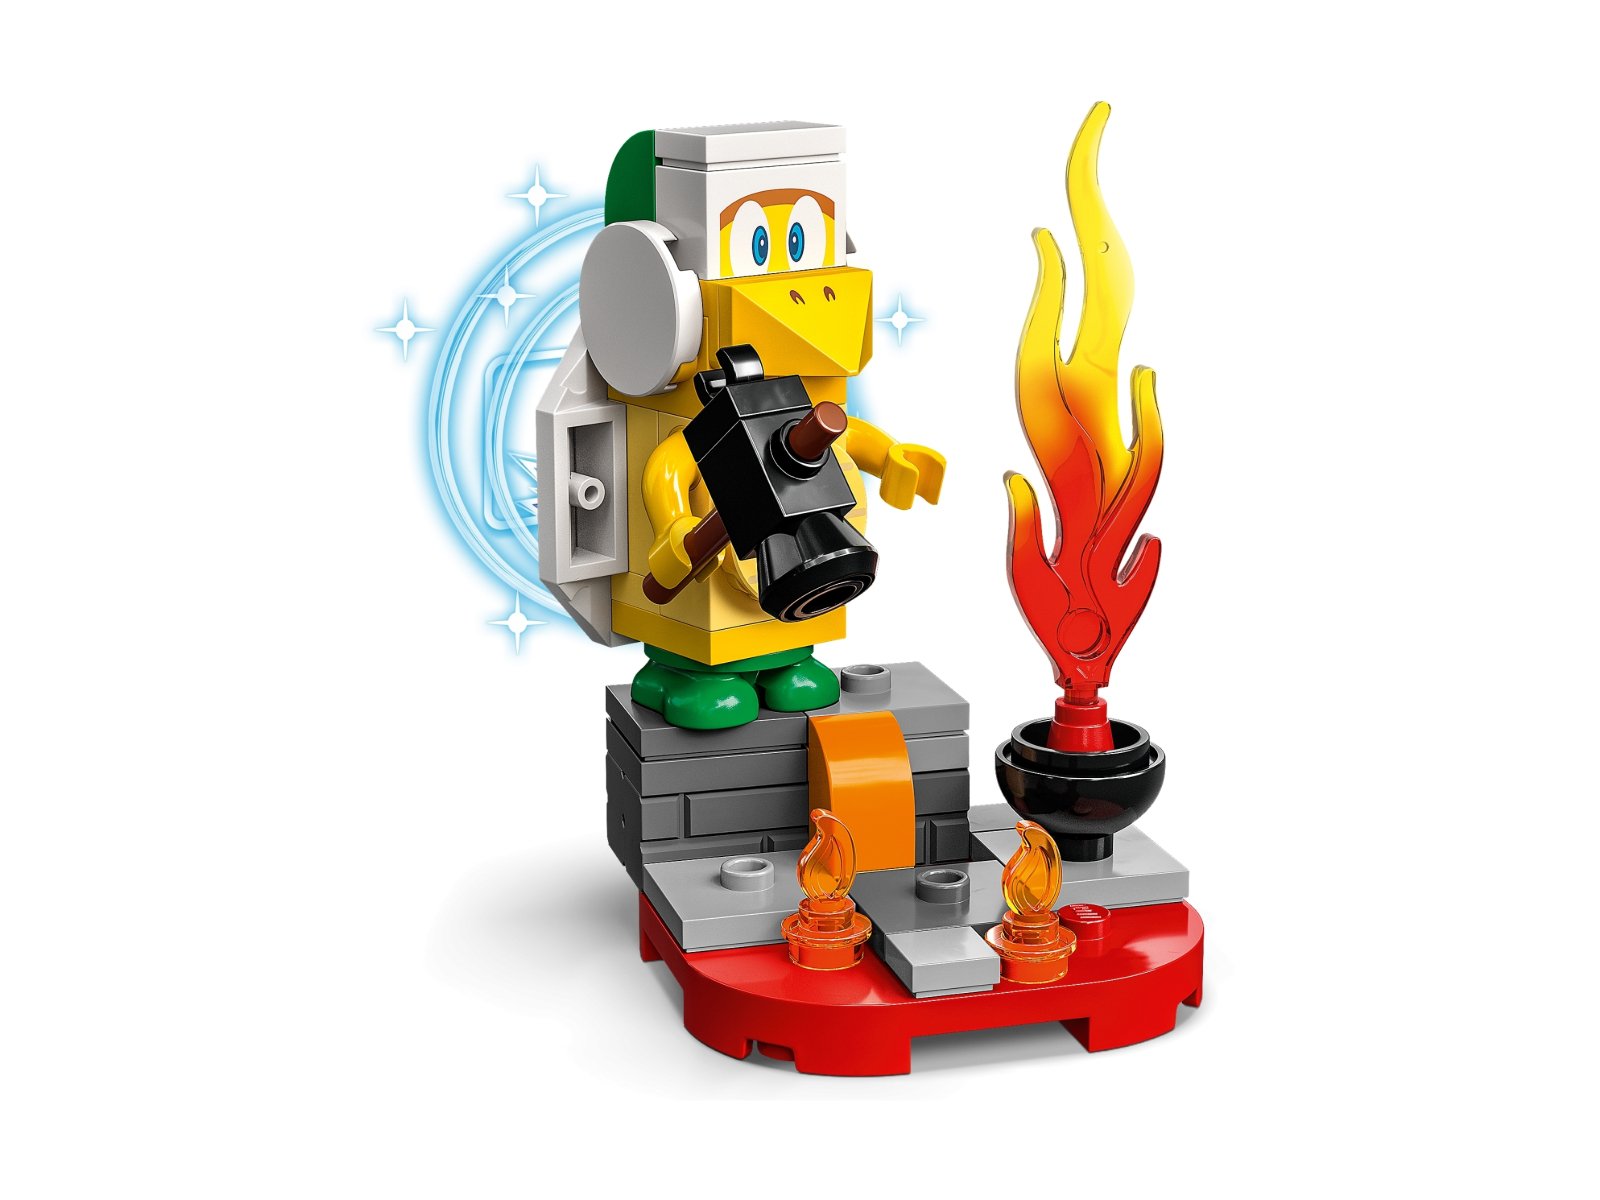 LEGO Super Mario Zestawy postaci — seria 5 71410